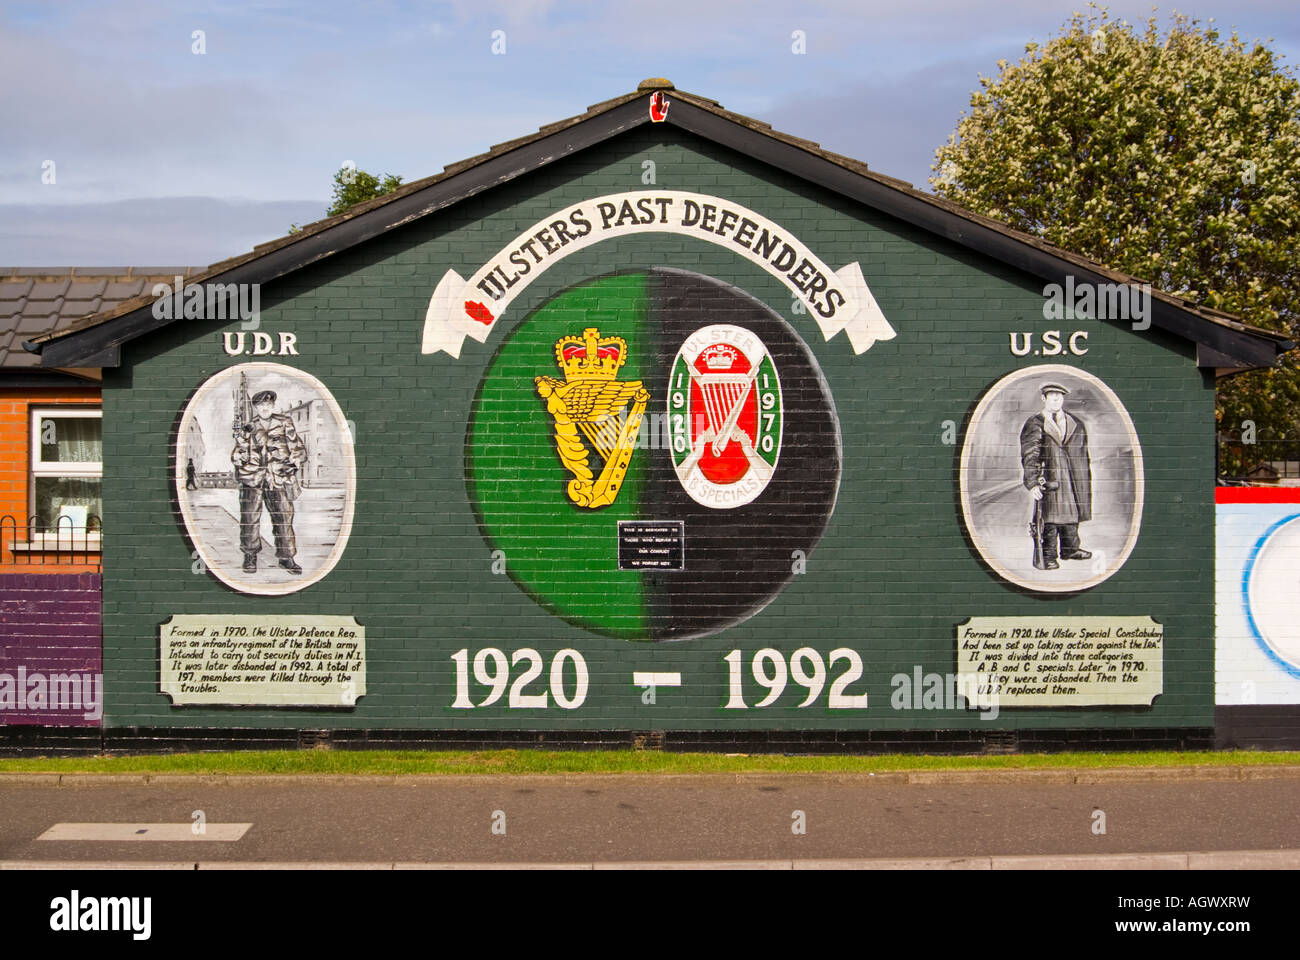 Mur pignon avec l'UDR (Ulster Defence Regiment) Peinture, Belfast, en Irlande du Nord Banque D'Images